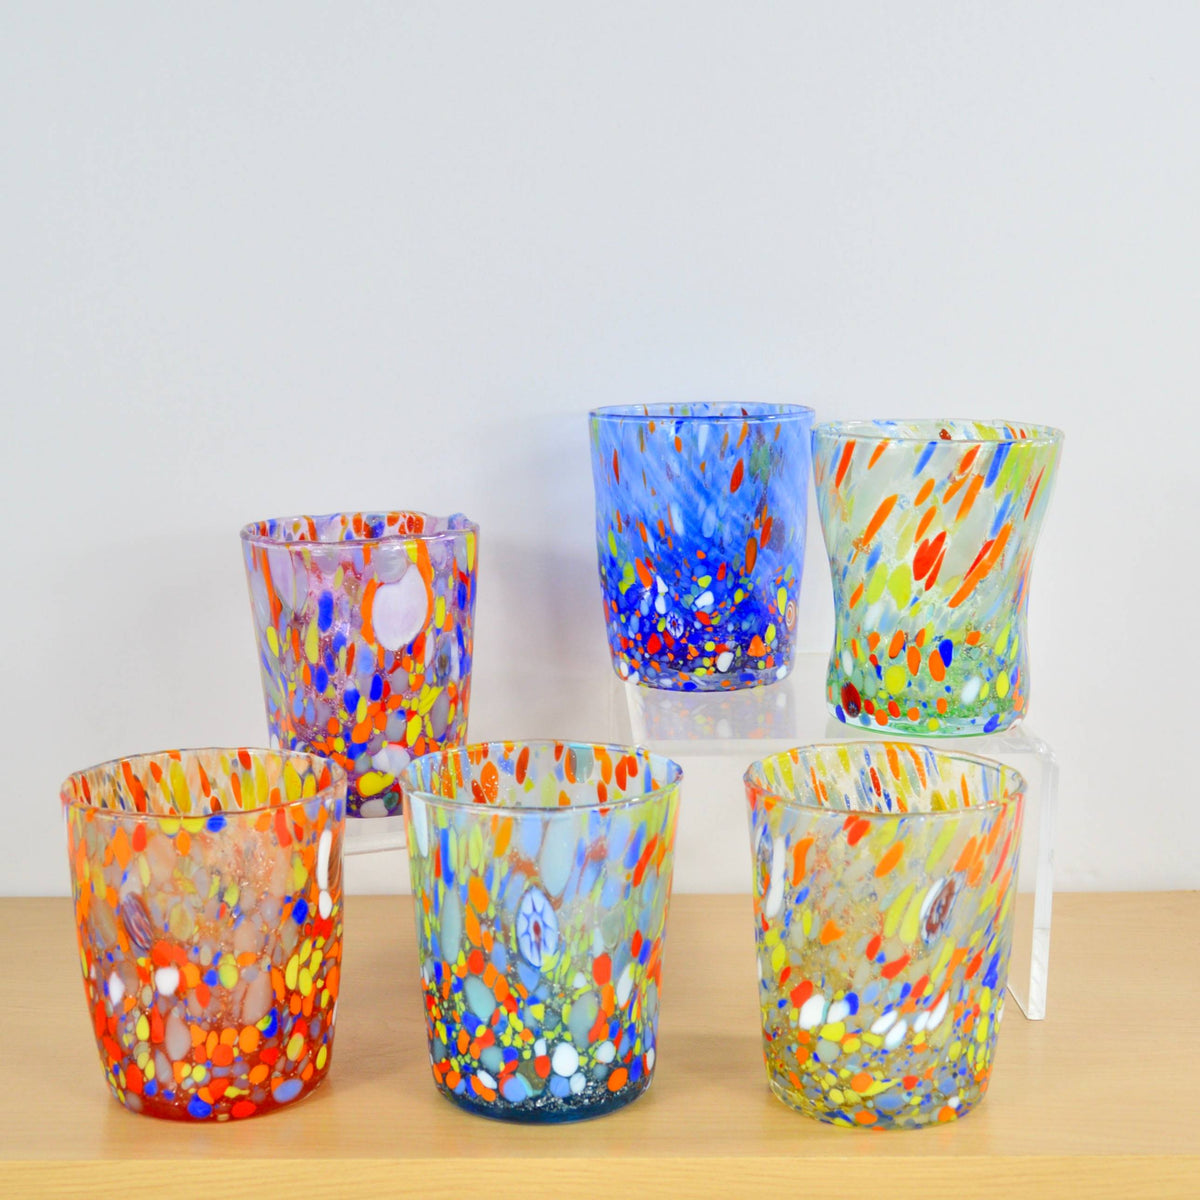 Franco Multi-Colored Glass Drinking Glasses, Set of 6, Made in Murano, Italy - My Italian Decor